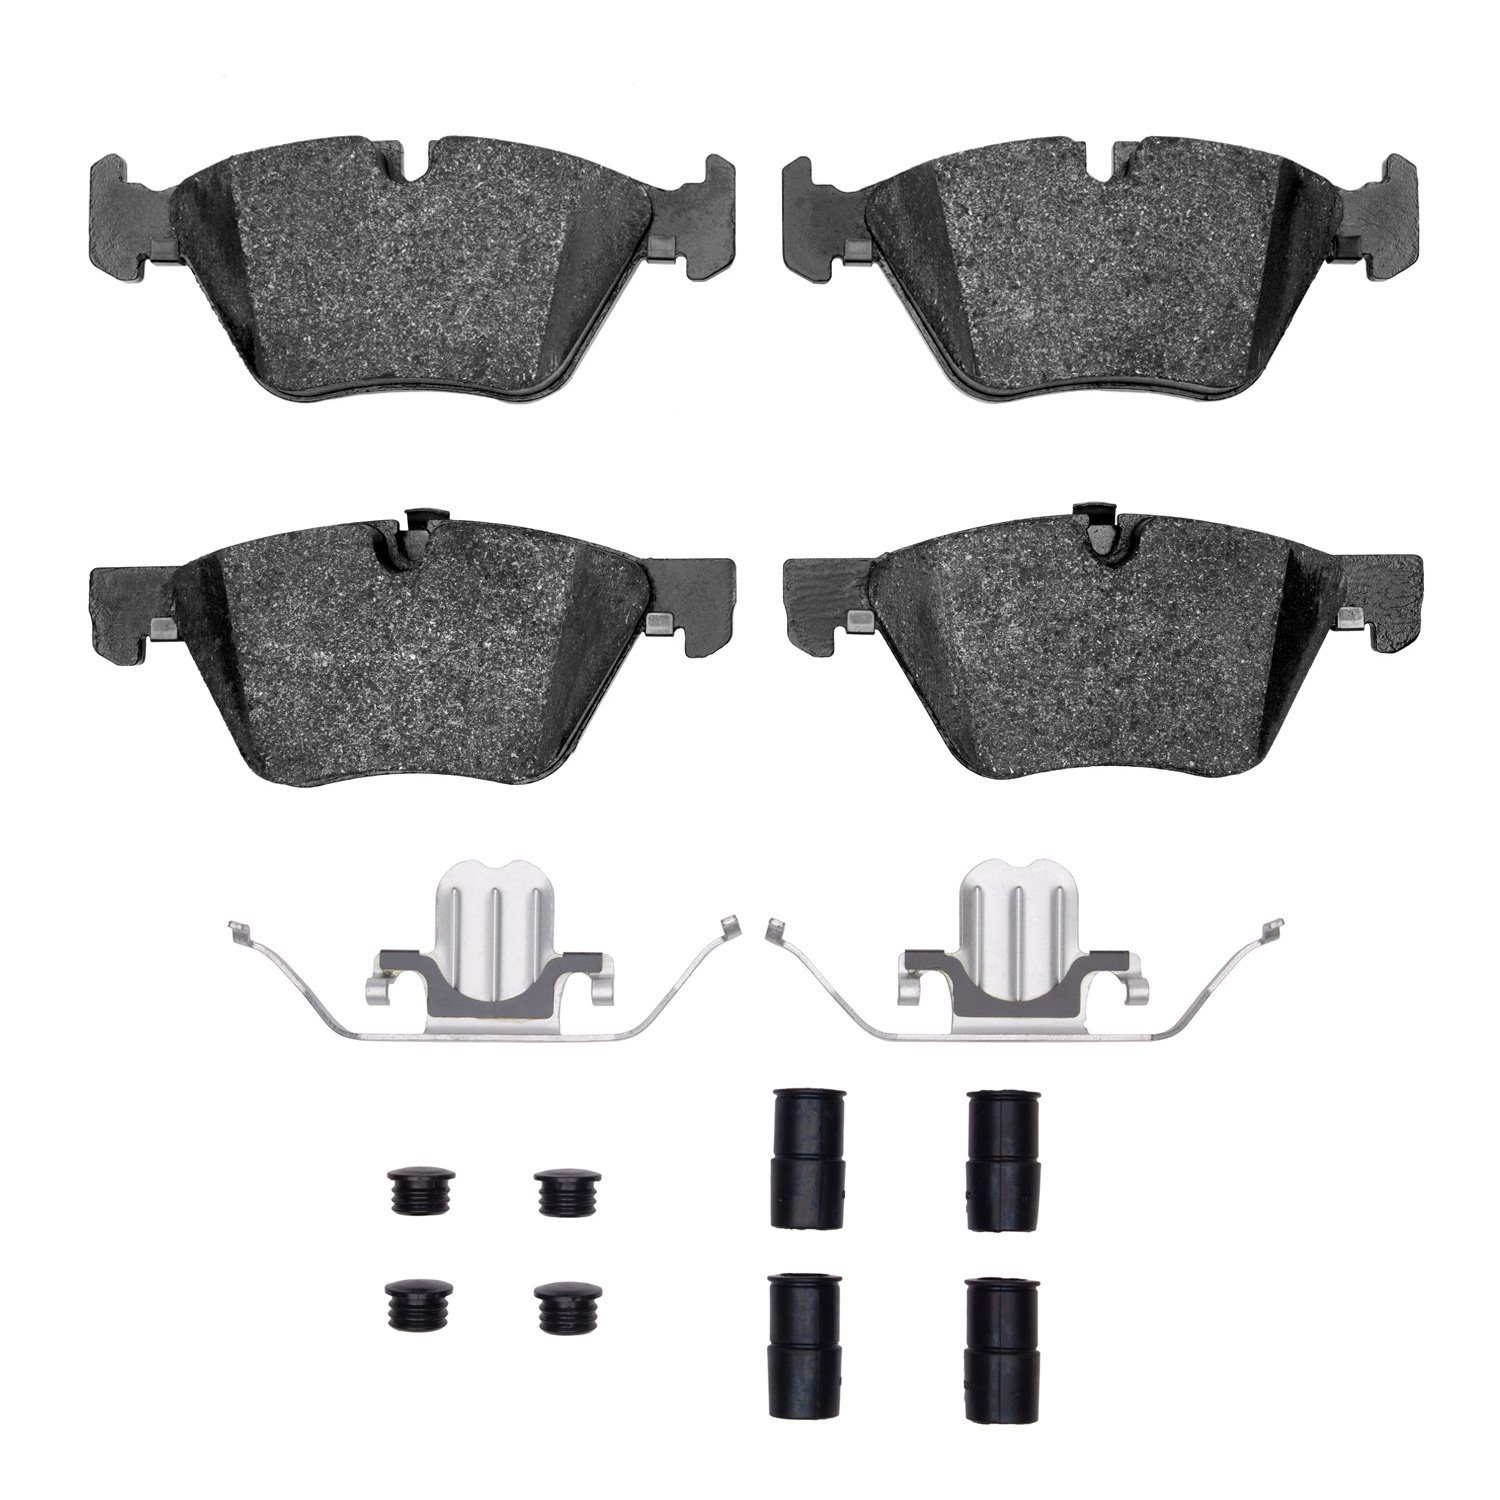 1551-1061-01 5000 Advanced Ceramic Brake Pads & Hardware Kit, Fits Select BMW, Position: Front